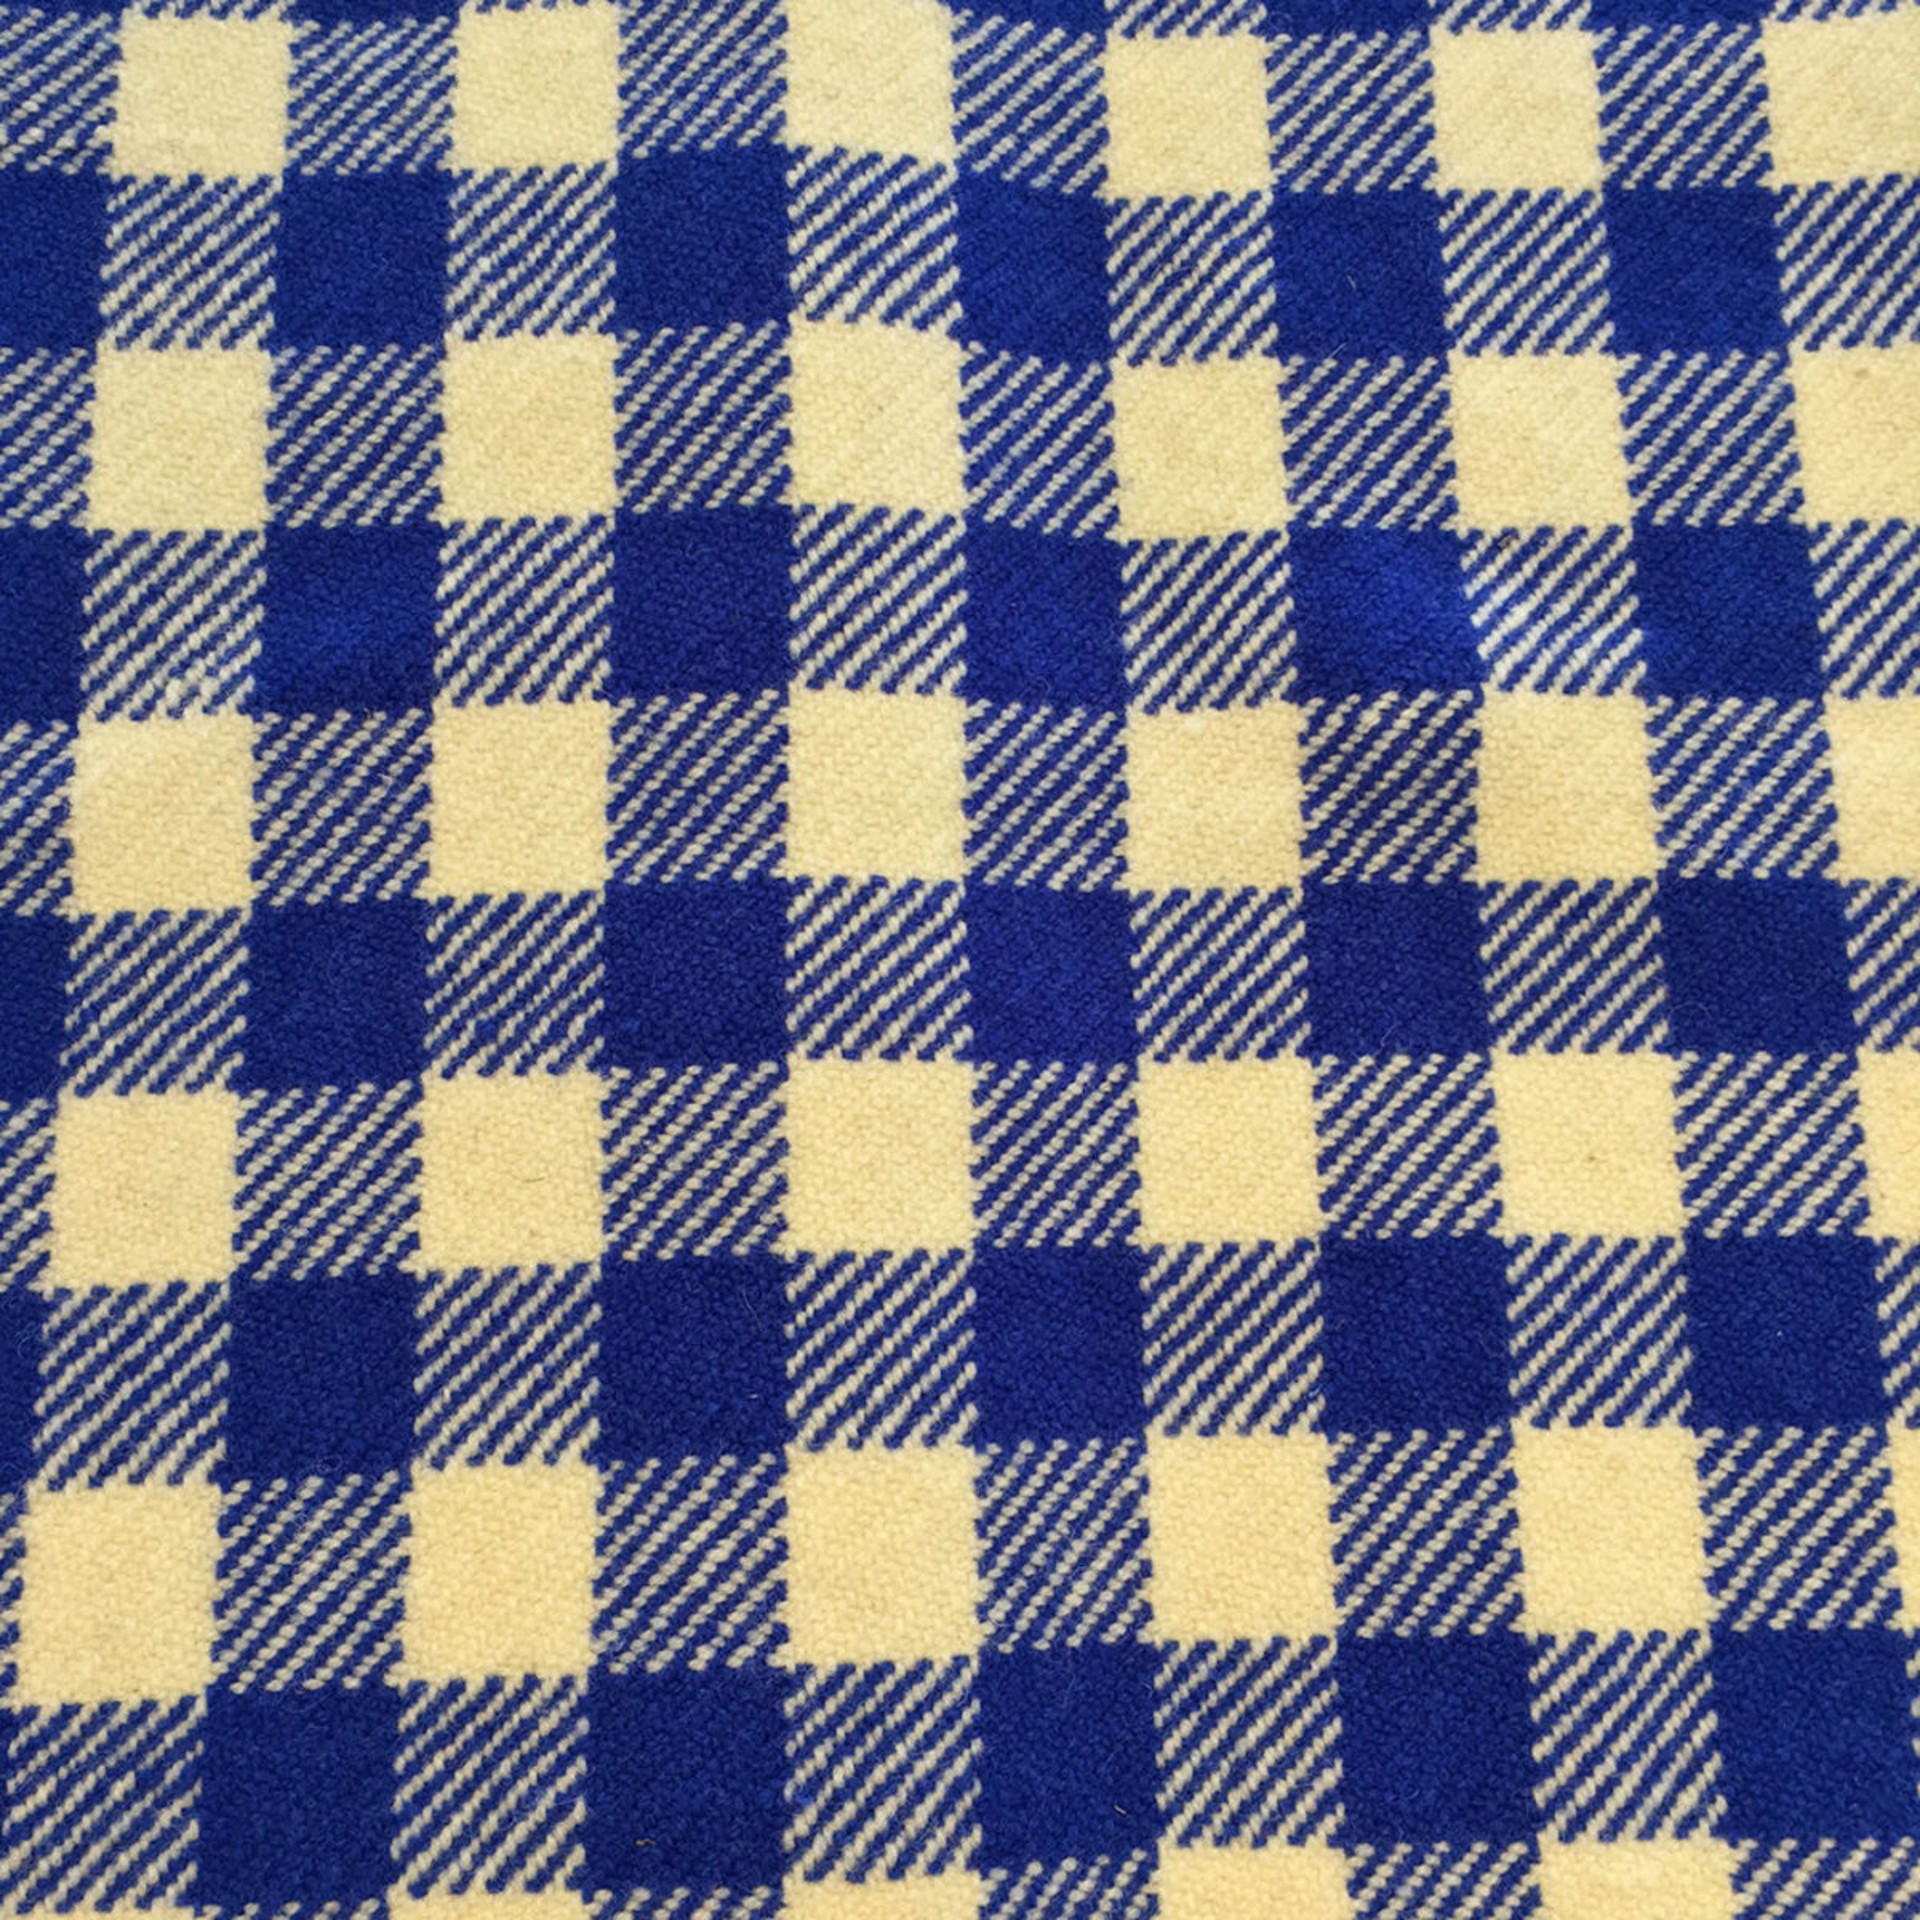 Maple Leafs Blue & White Gingham Blanket by Liz Pead